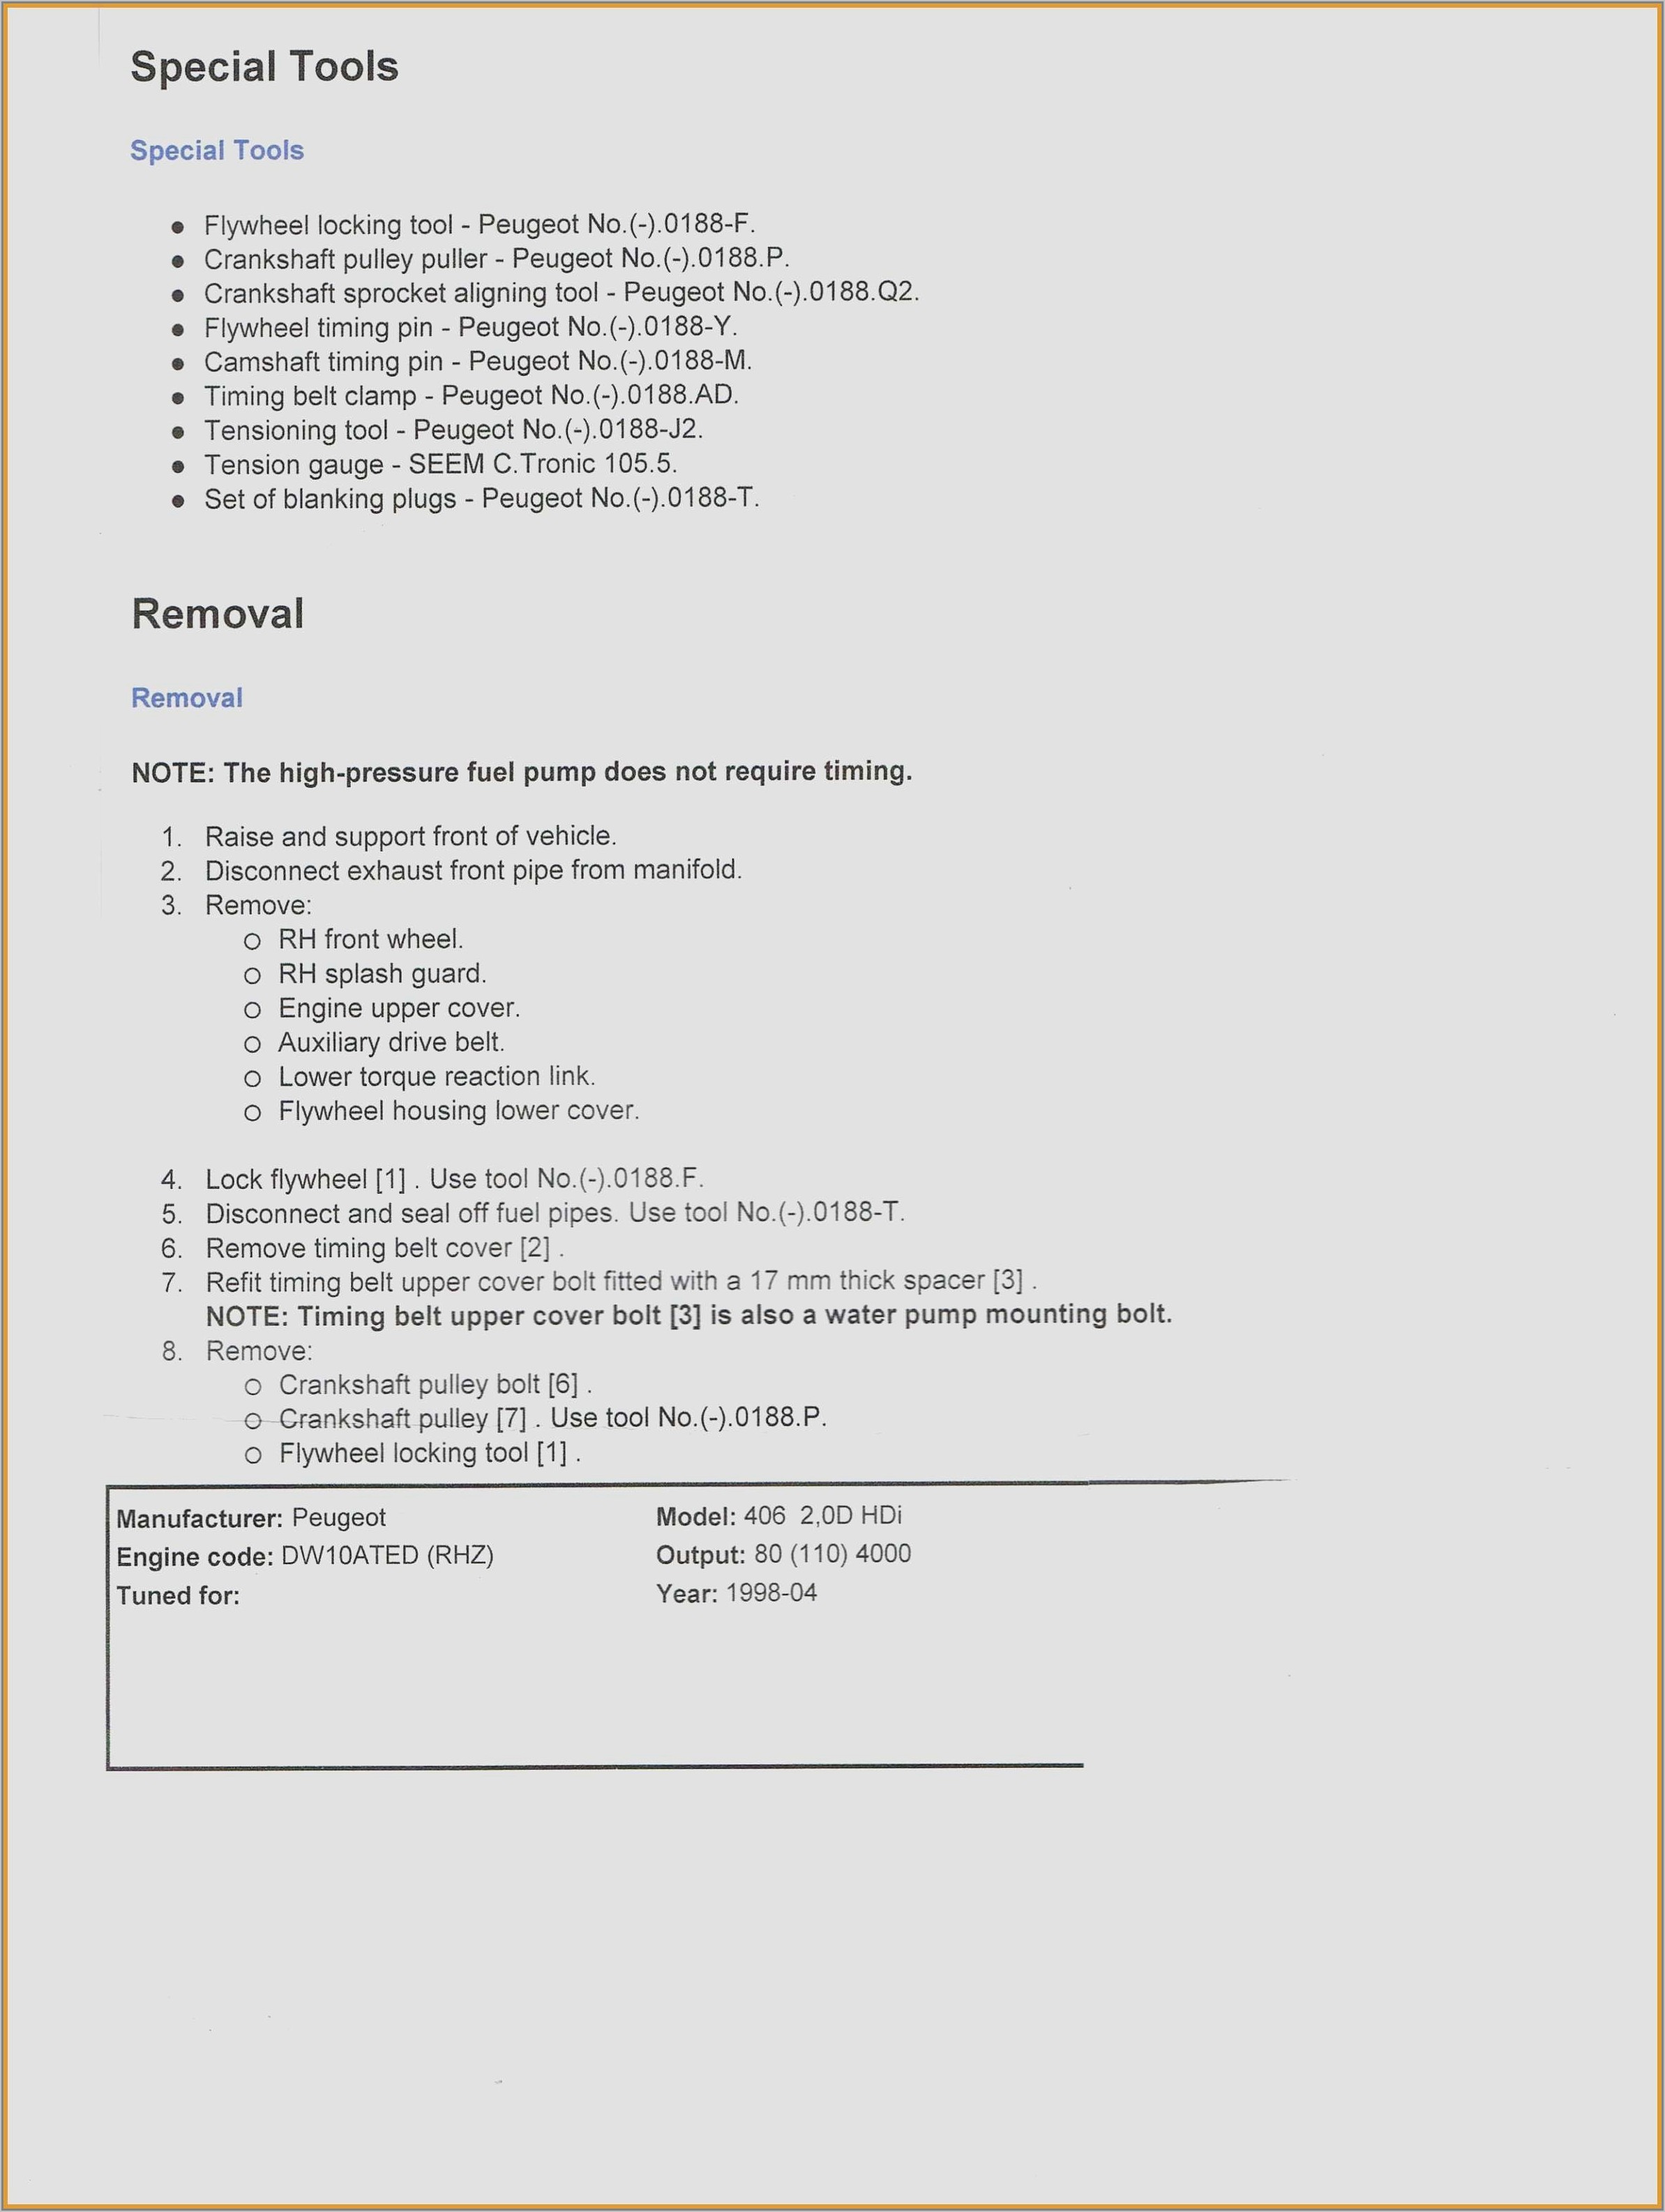 sample-resume-templates-in-word-resume-restiumani-resume-nvlw7d0l9l